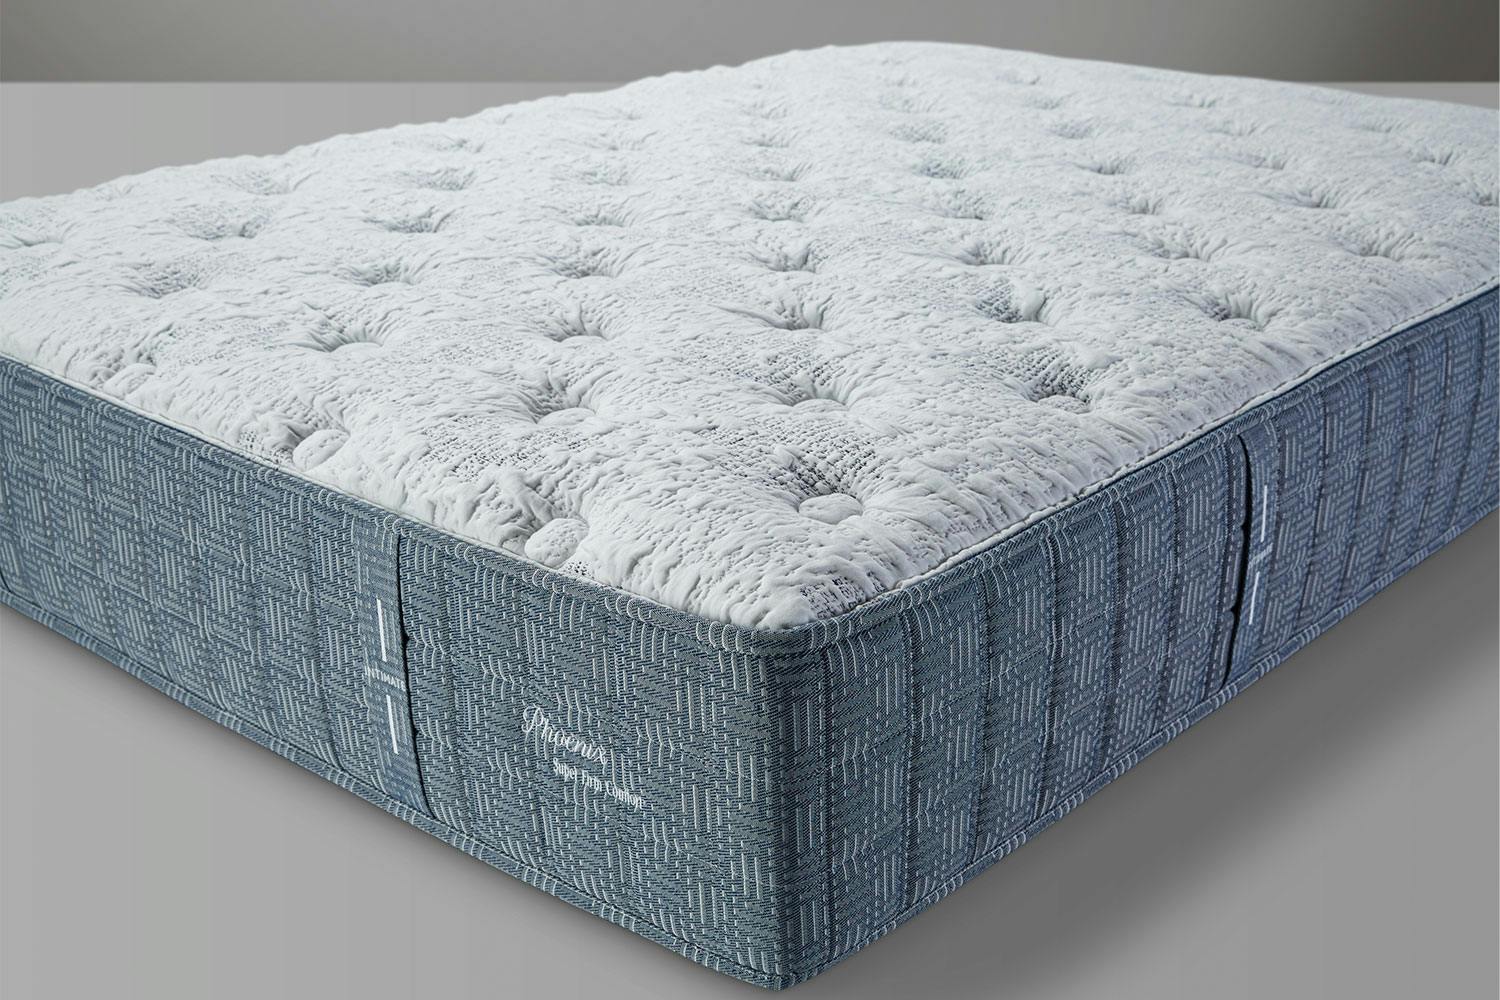 extra firm stratford queen mattress set